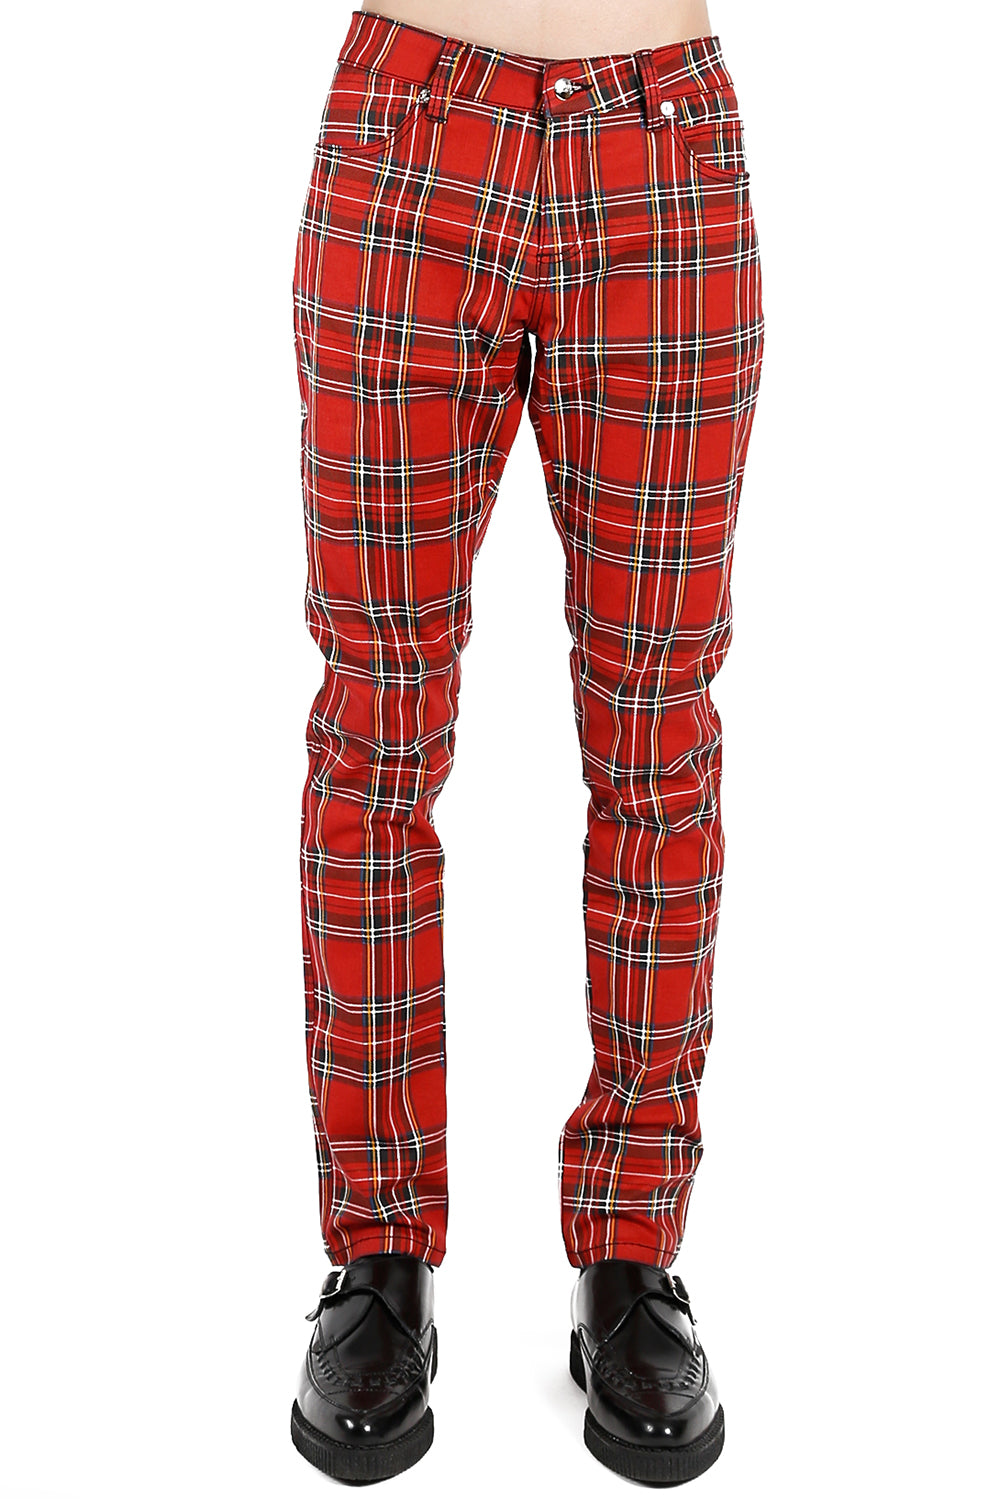 Tartan Checked Punk Rockability Skinny Plaid Trousers Red & Black -   Canada